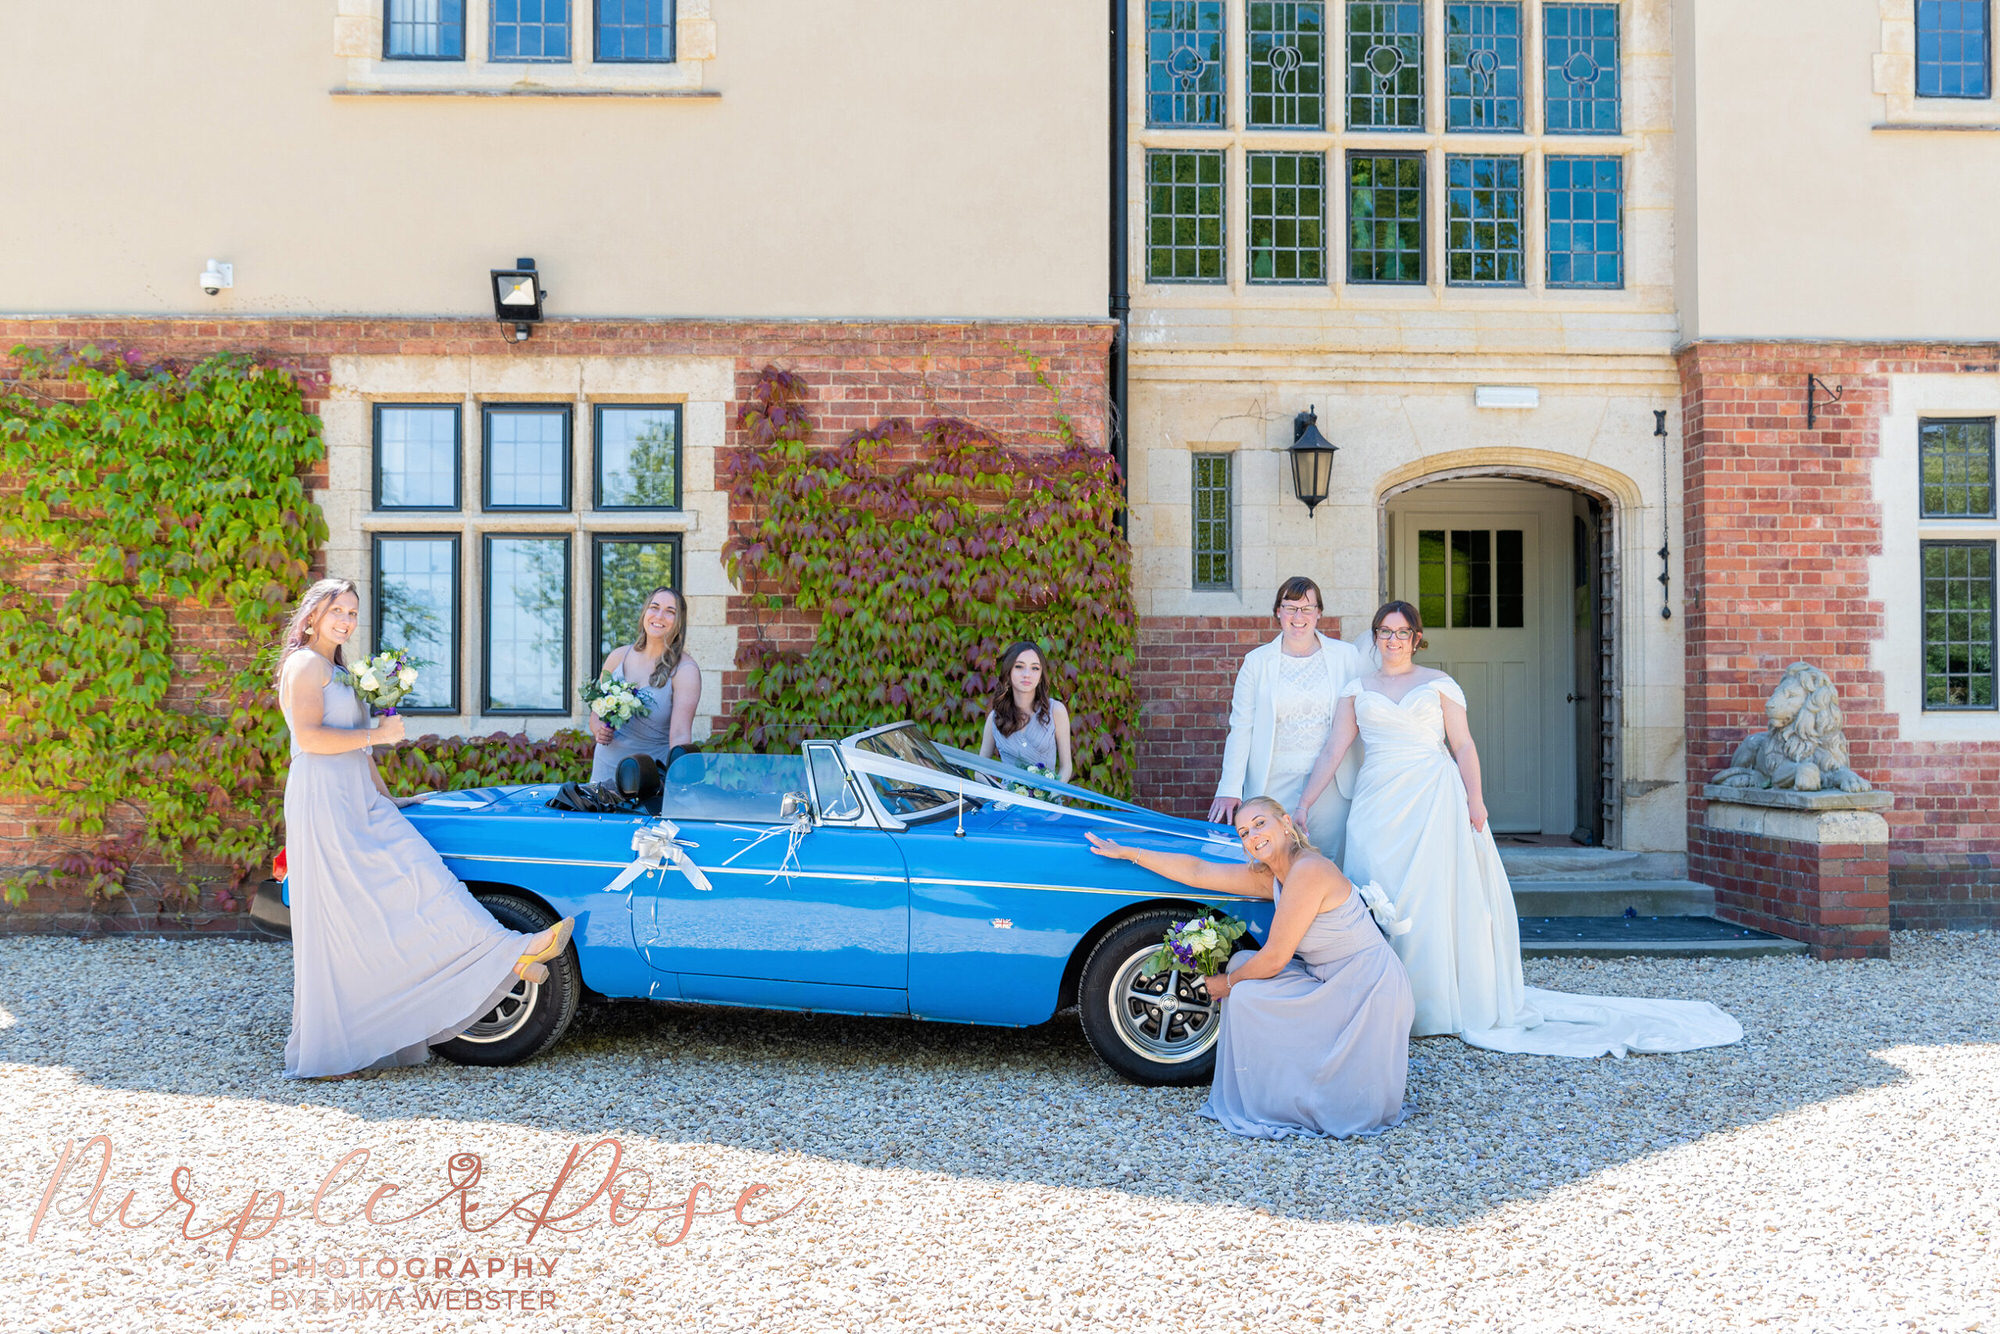 Brides and bridesmaid with wedding car